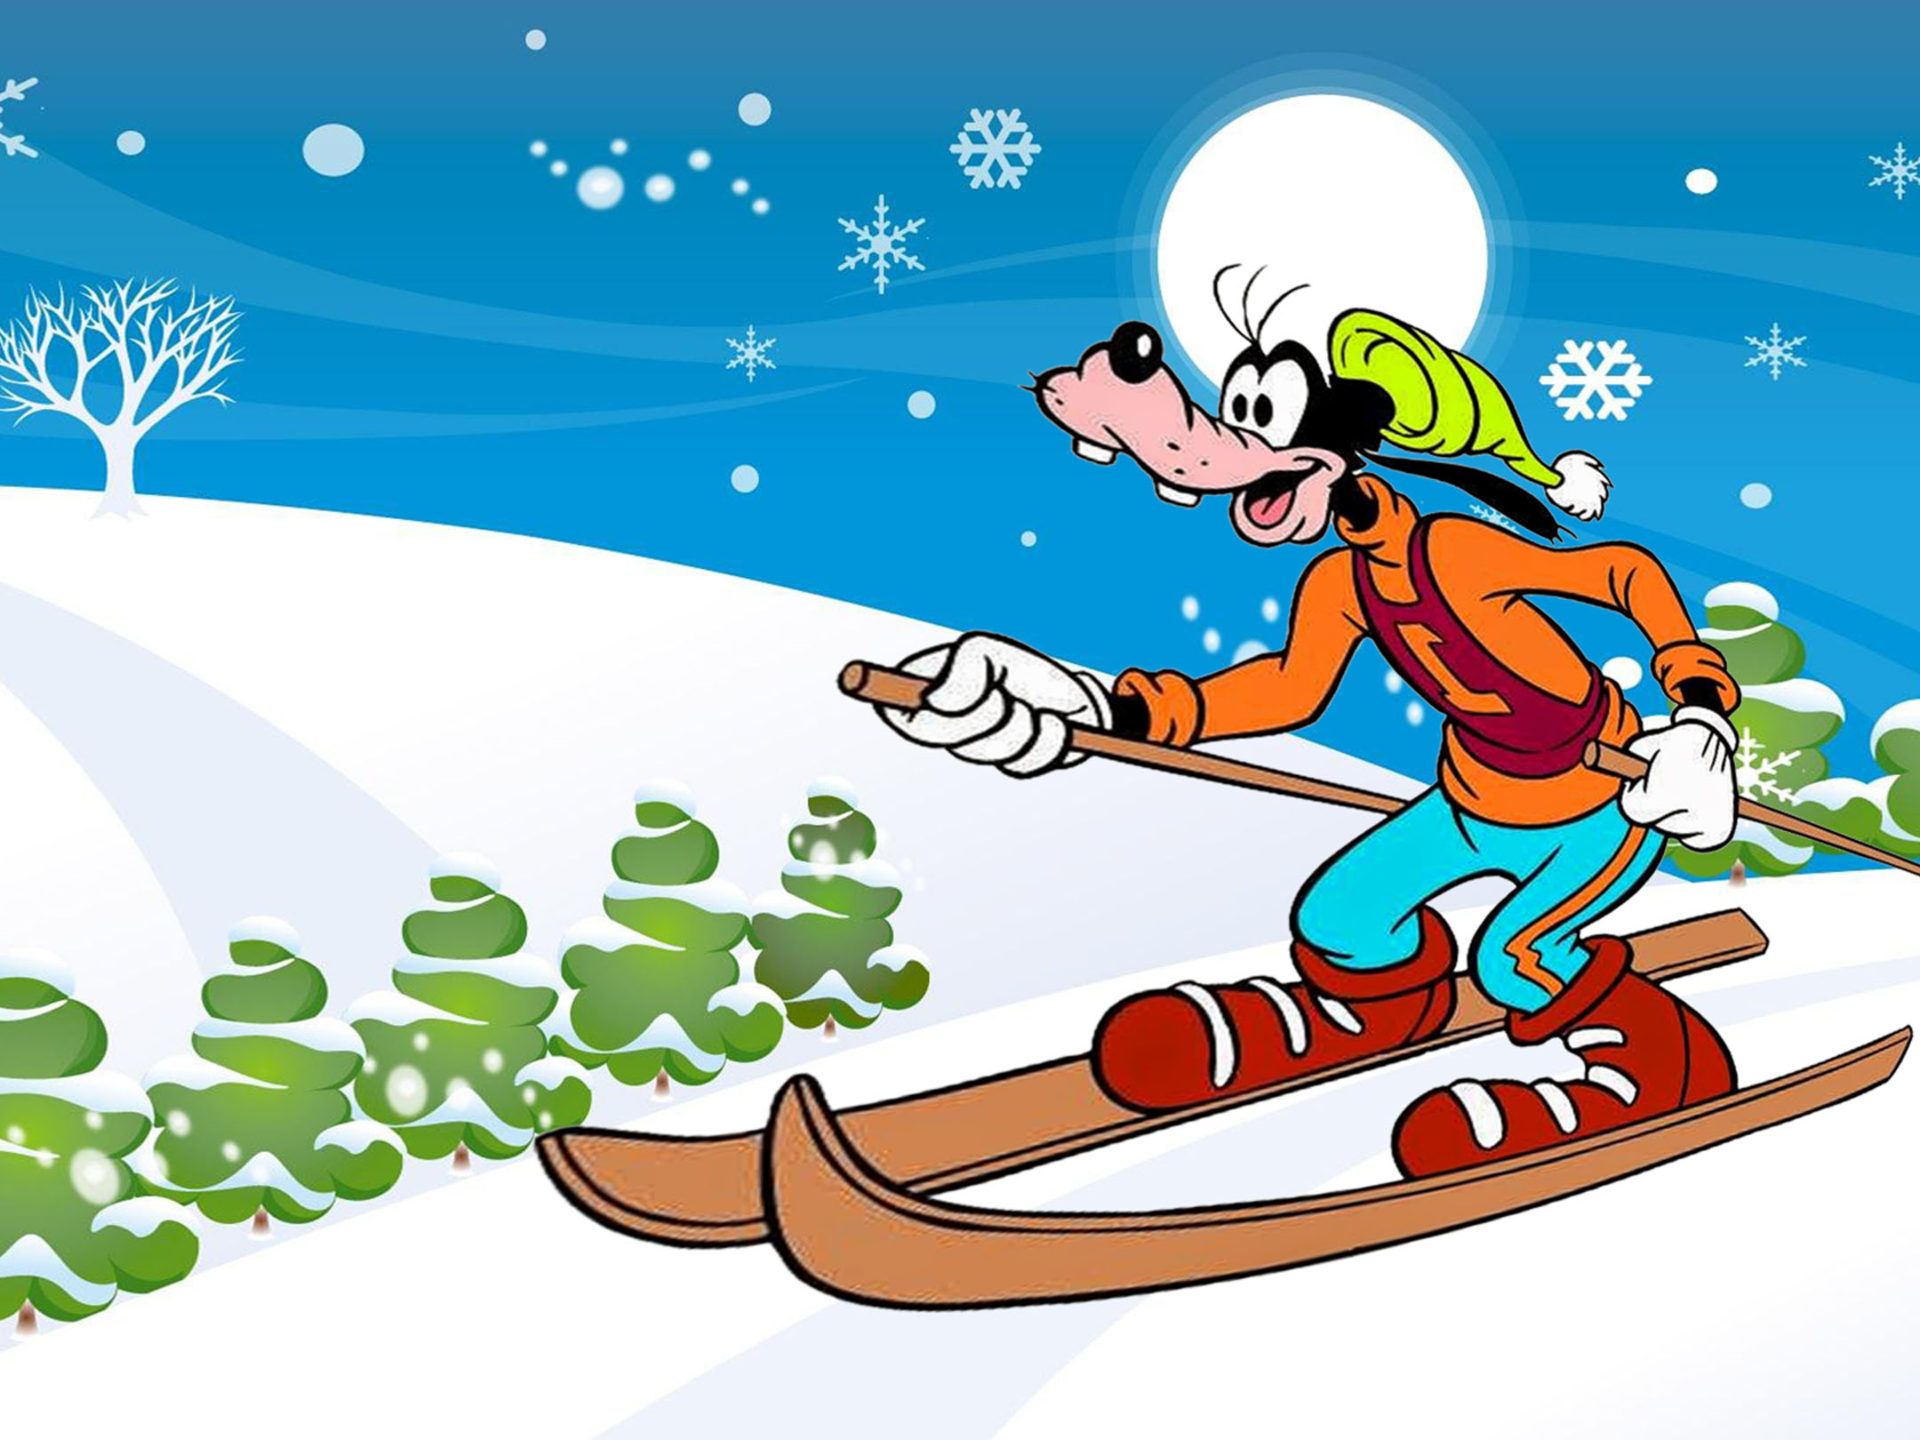 Walt Disney Cartoon Goofy Skiing Path Winter Mountain Snow Desktop HD Wallpaper For Mobile Phones And Computer 2880x1620, Wallpaper13.com